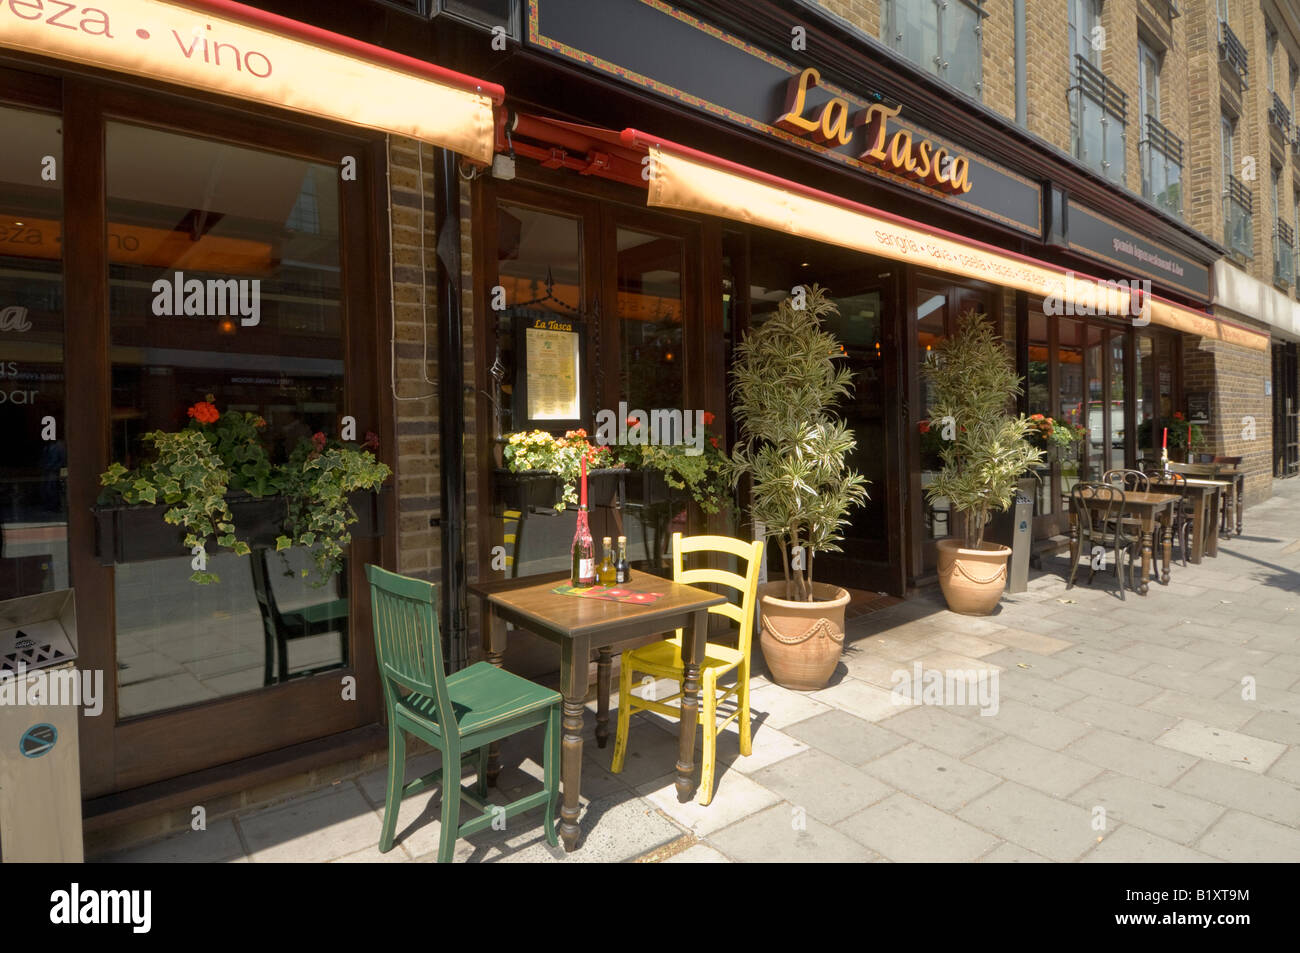 La Tasca Restaurant Essex Road Islington London Stock Photo